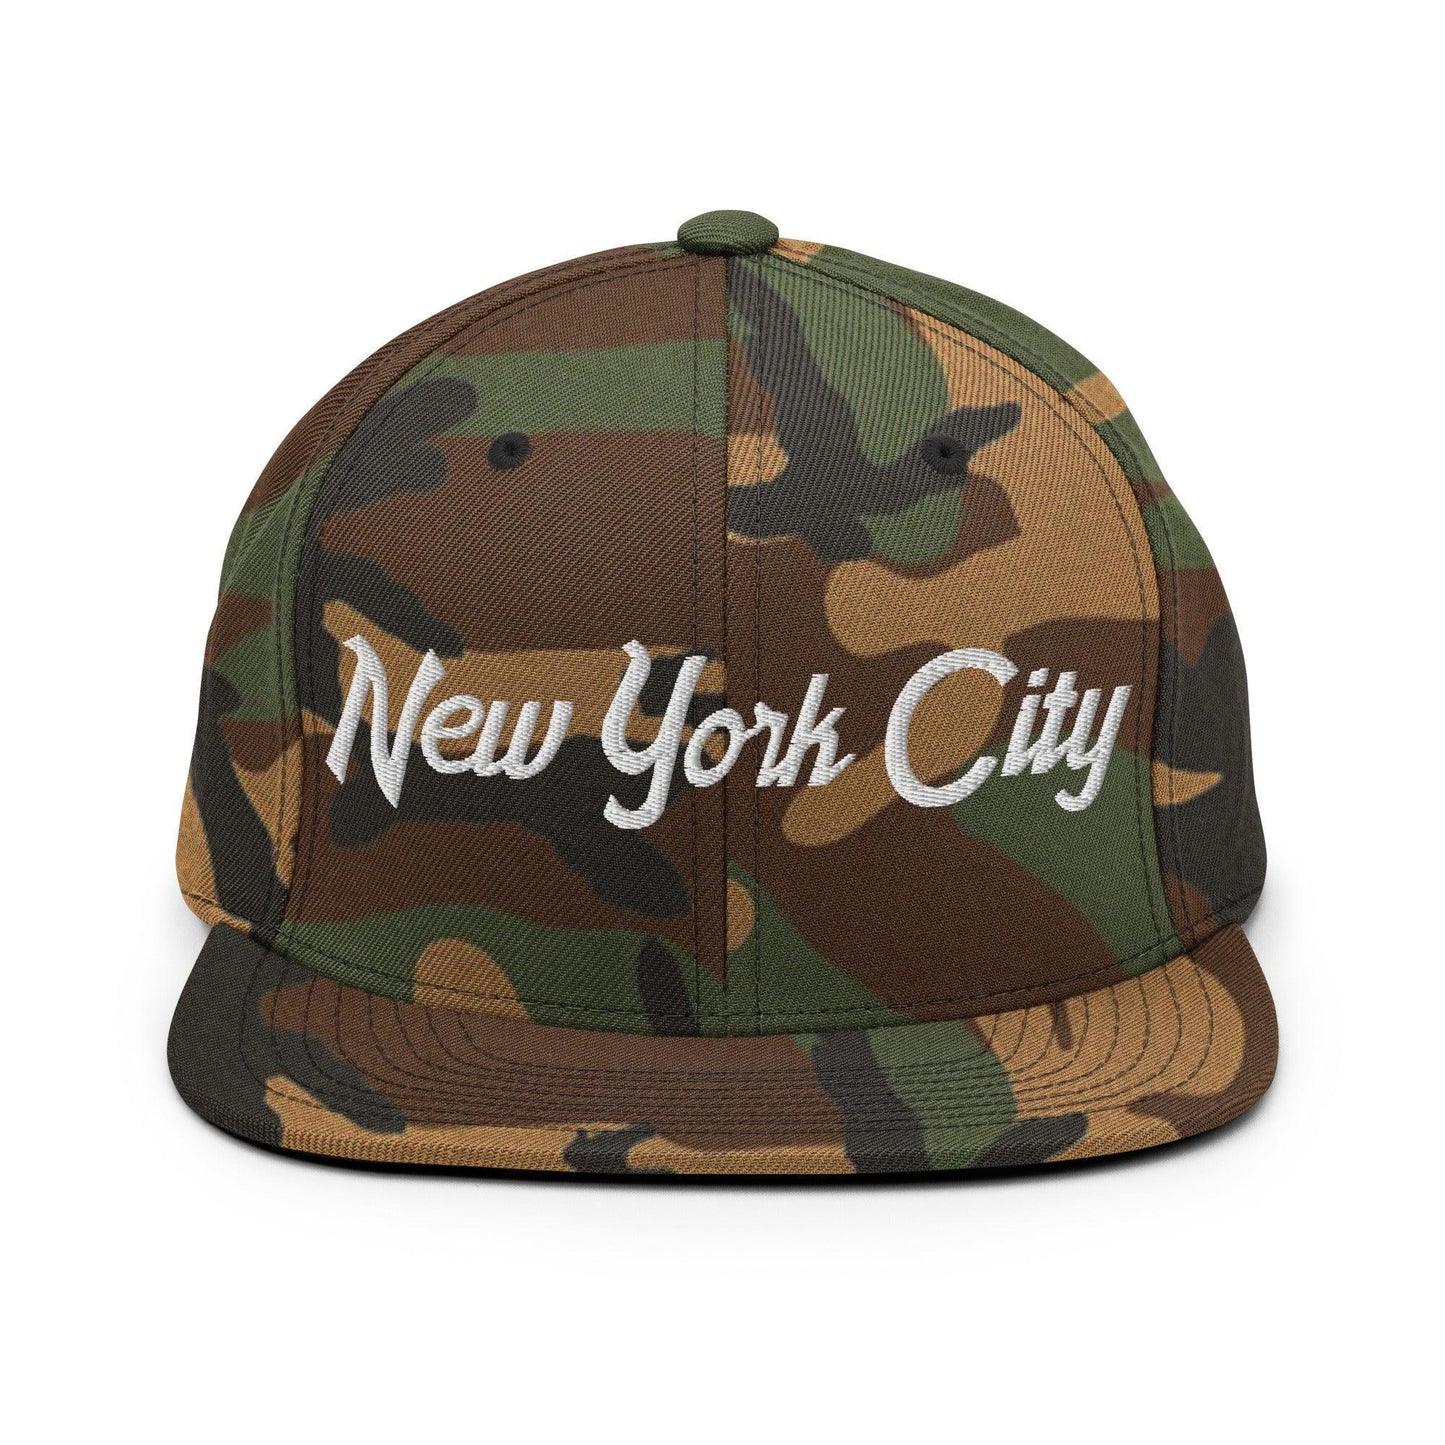 New York City Script Snapback Hat Green Camo